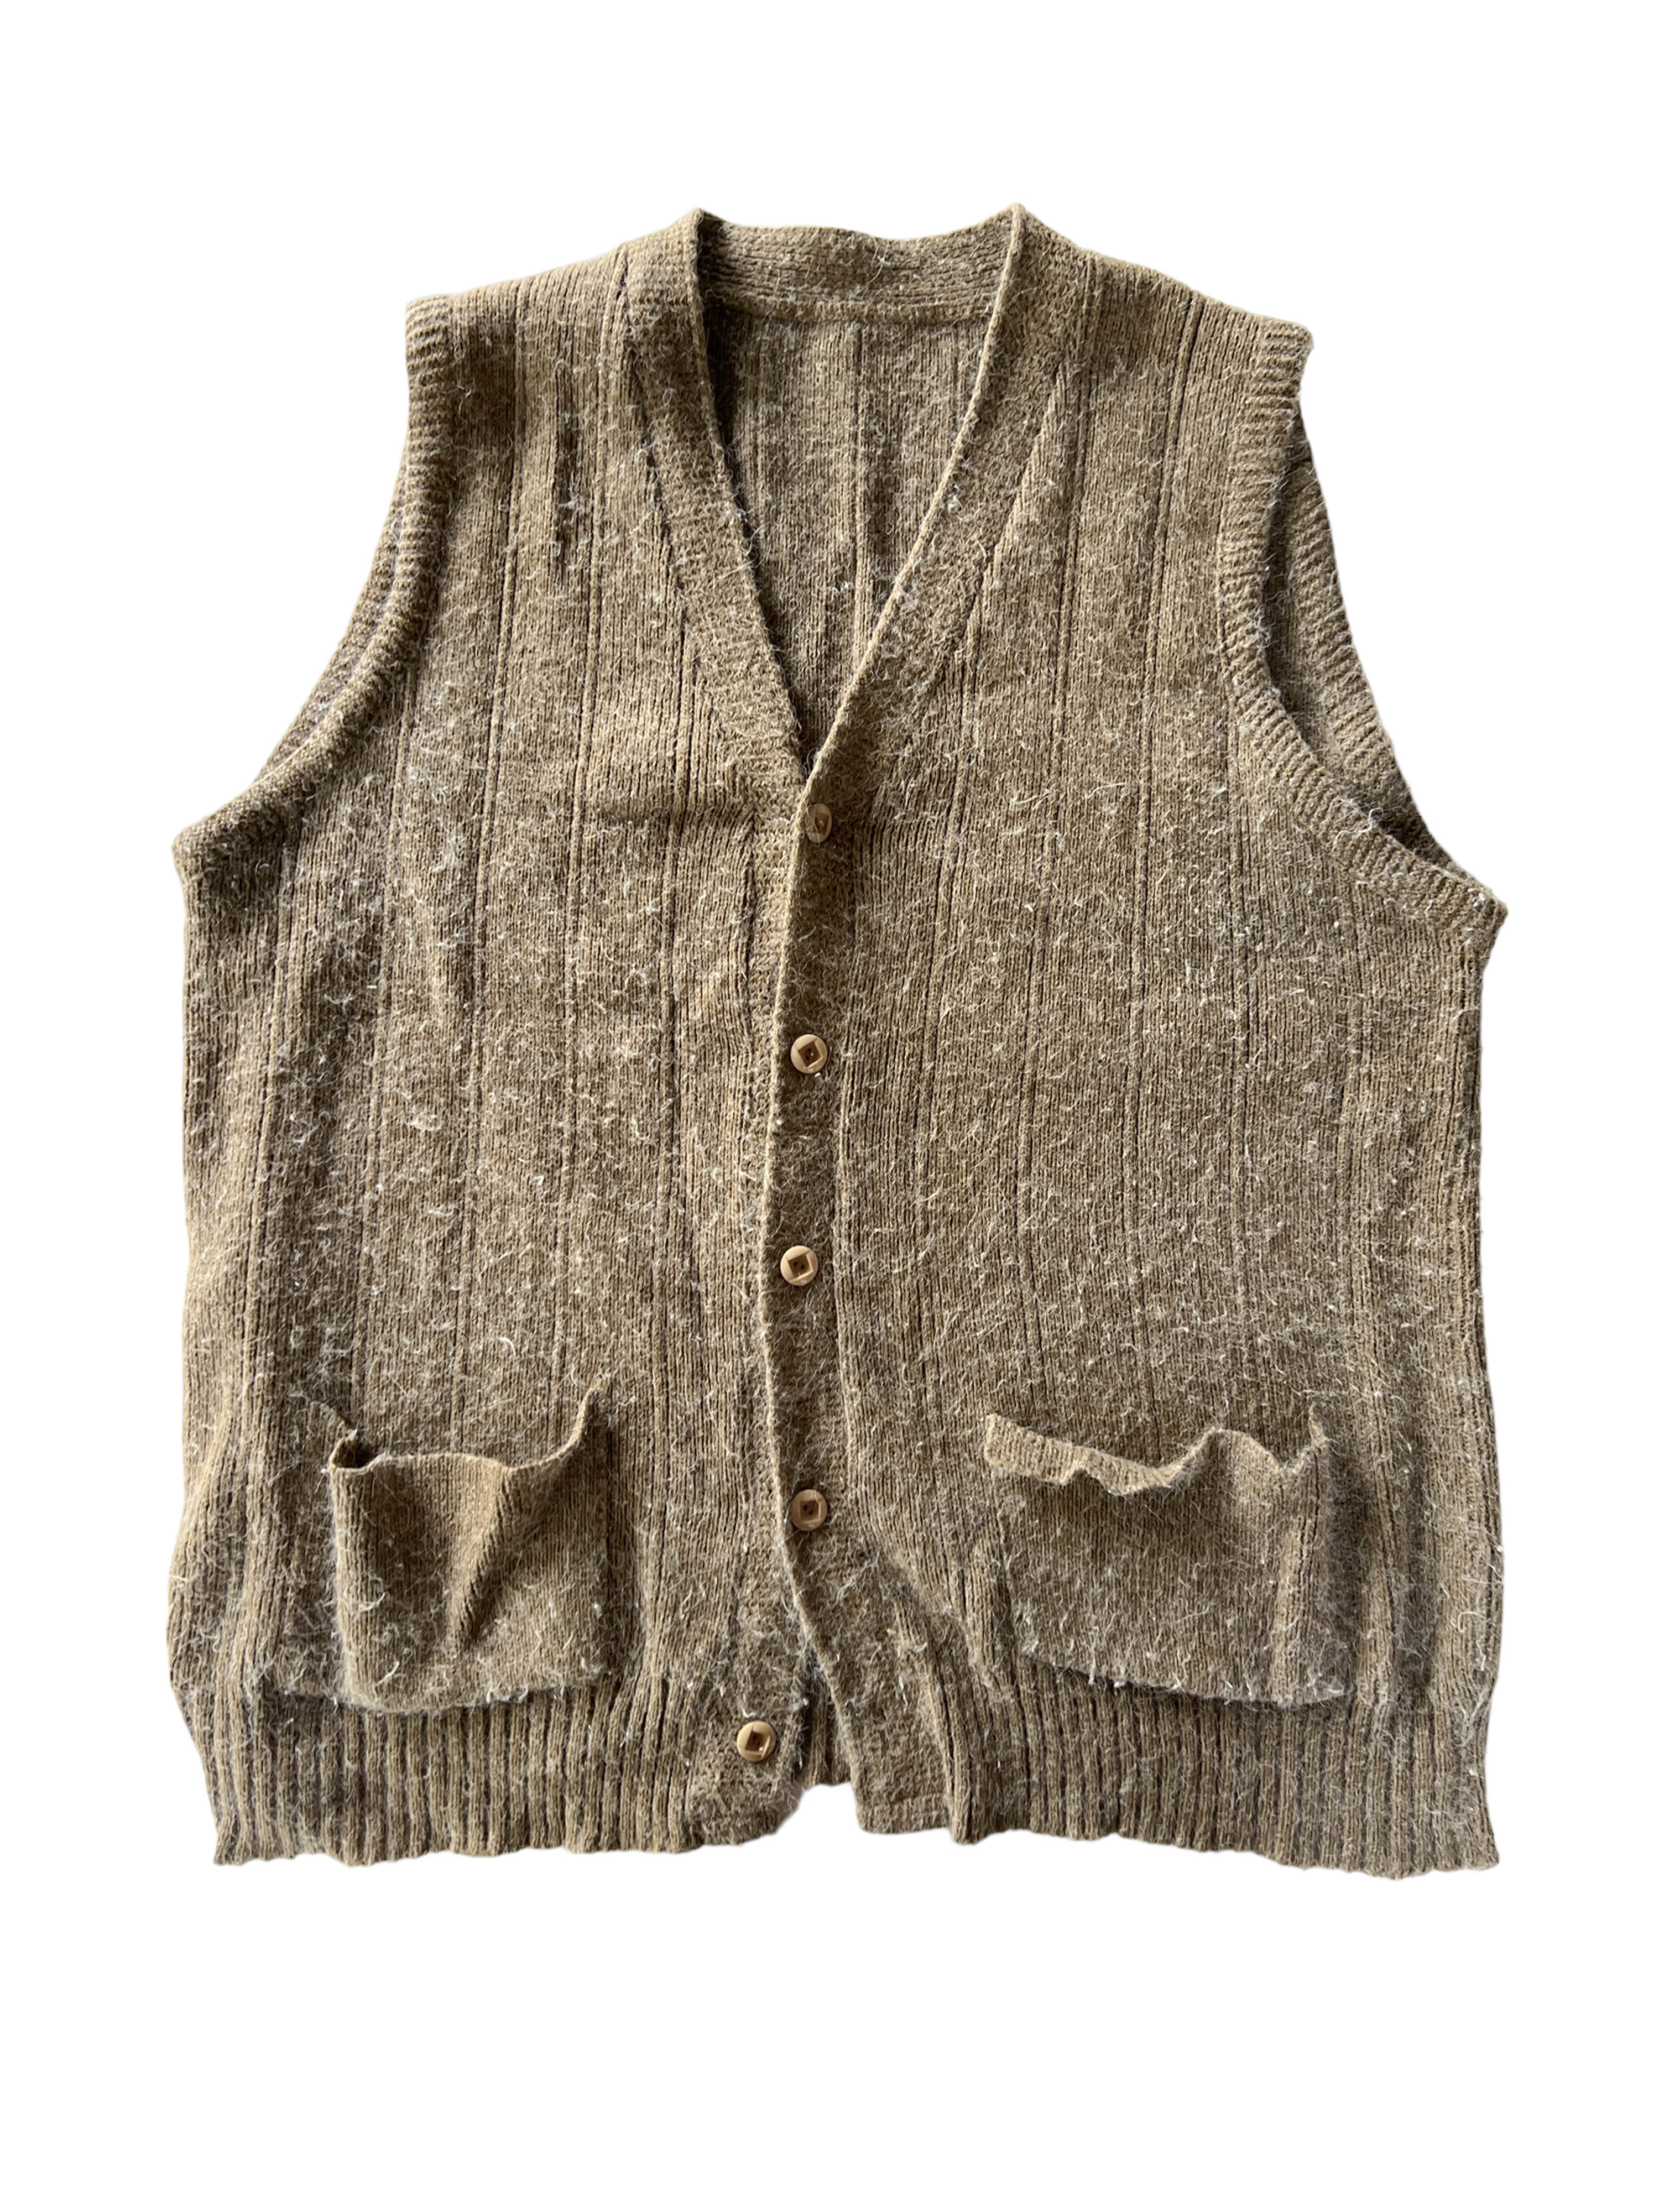 vintage overfit knit vest